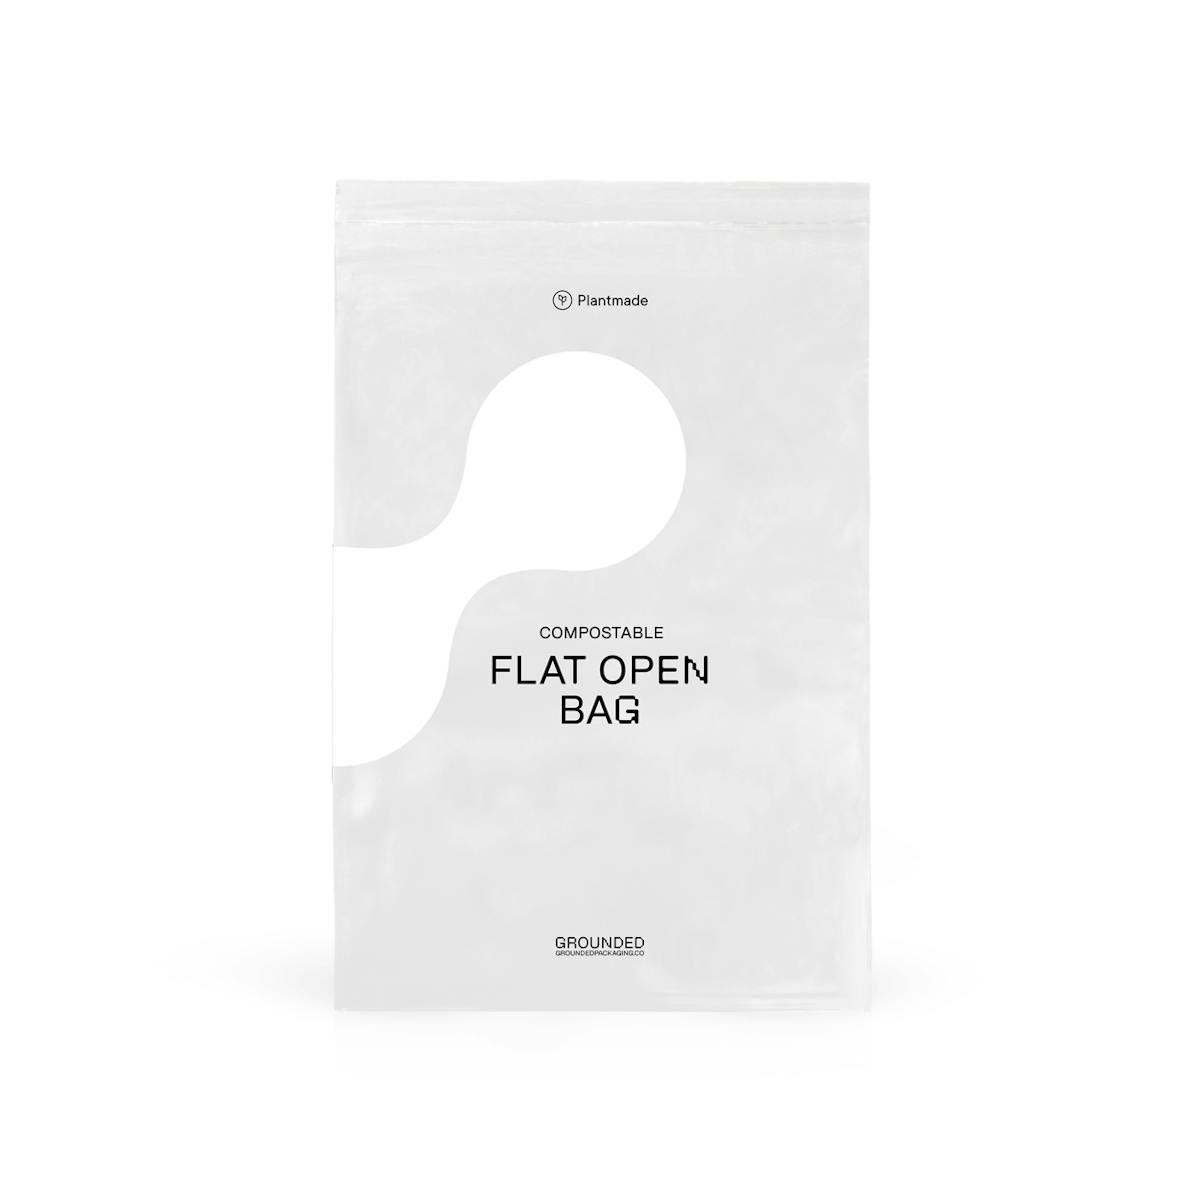 Compostable flat open bag 1